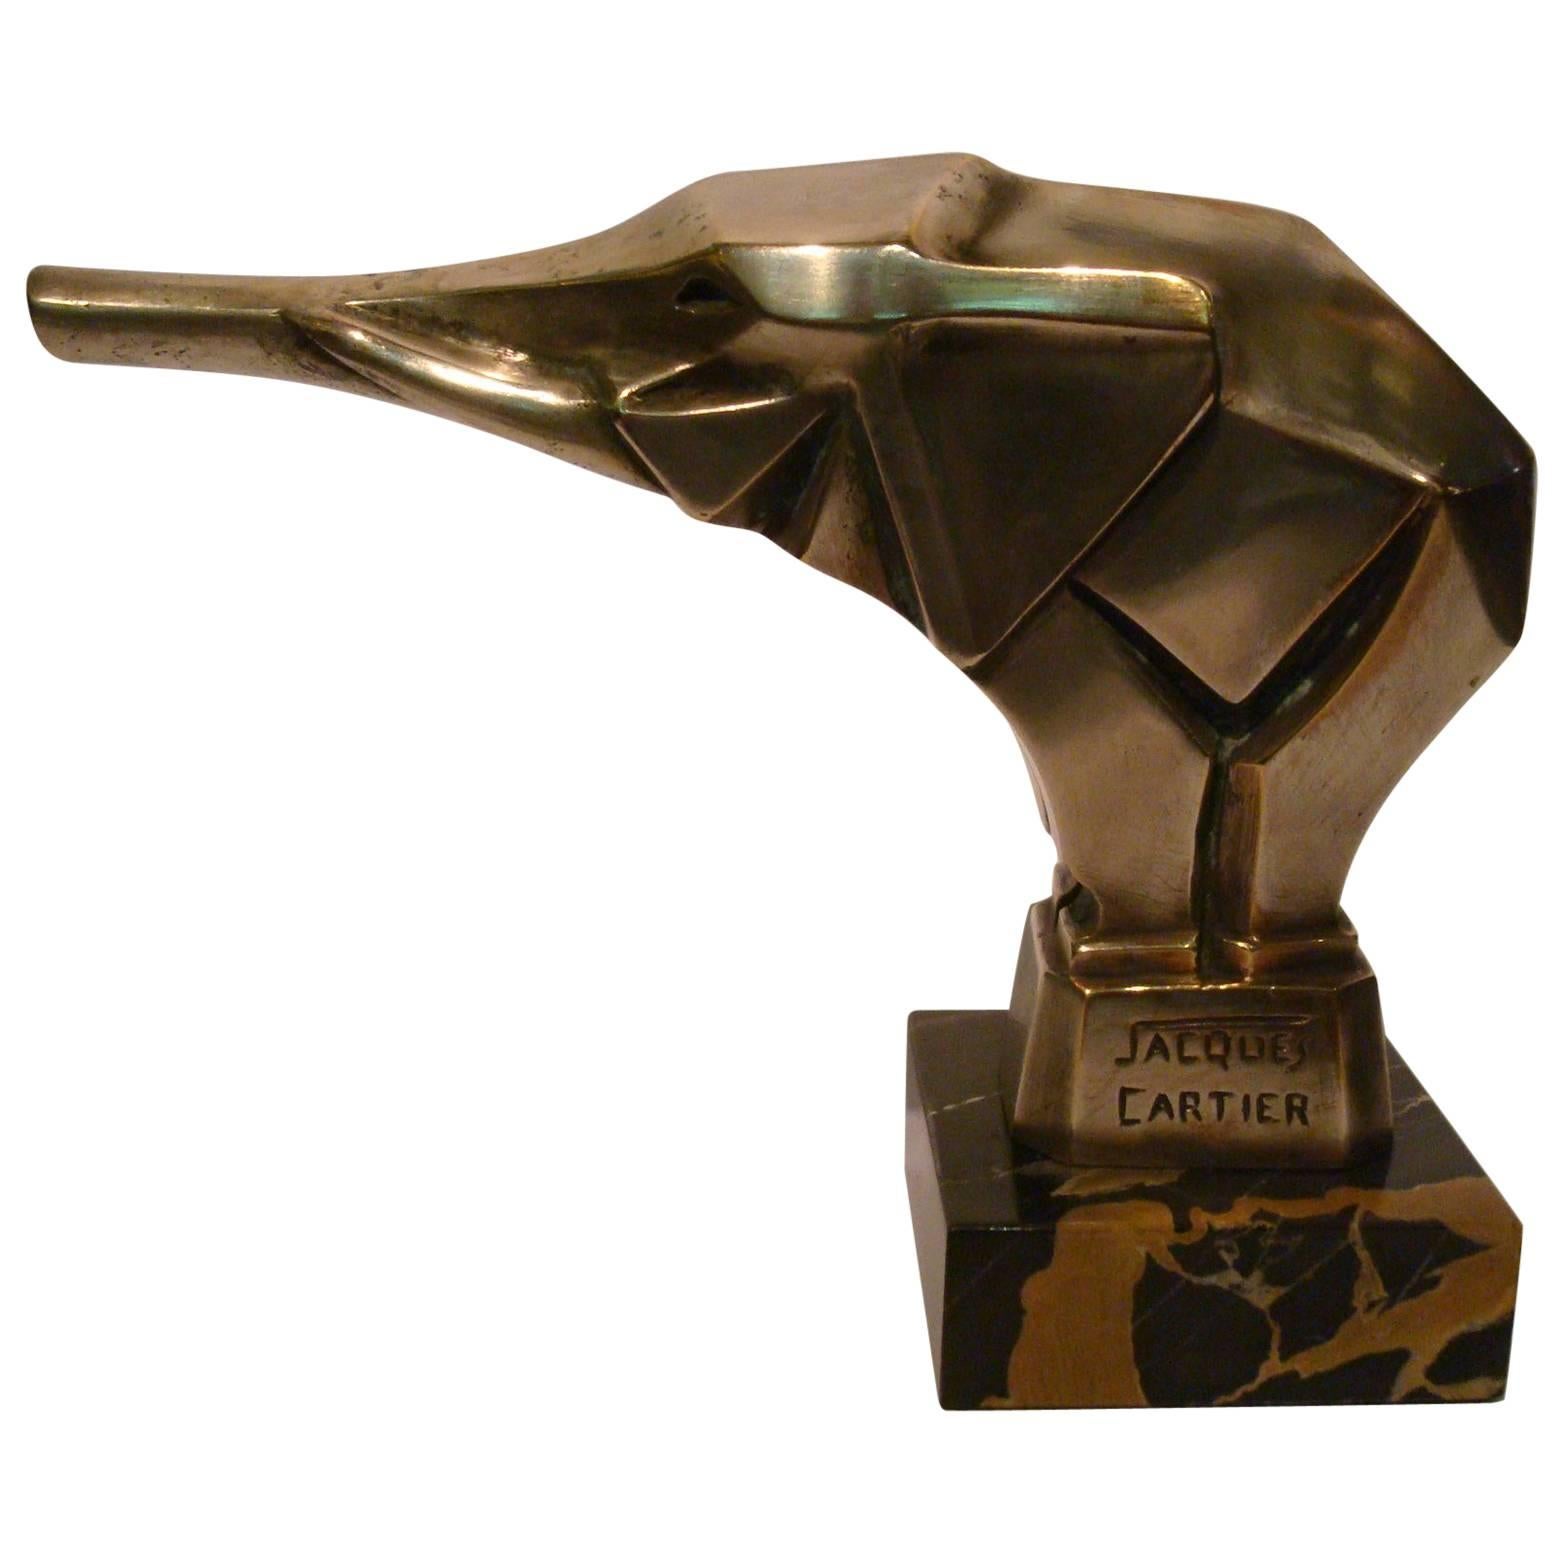 Jacques Cartier Art Deco Elephant Cubist Car Mascot Bronze with Silvered Patina